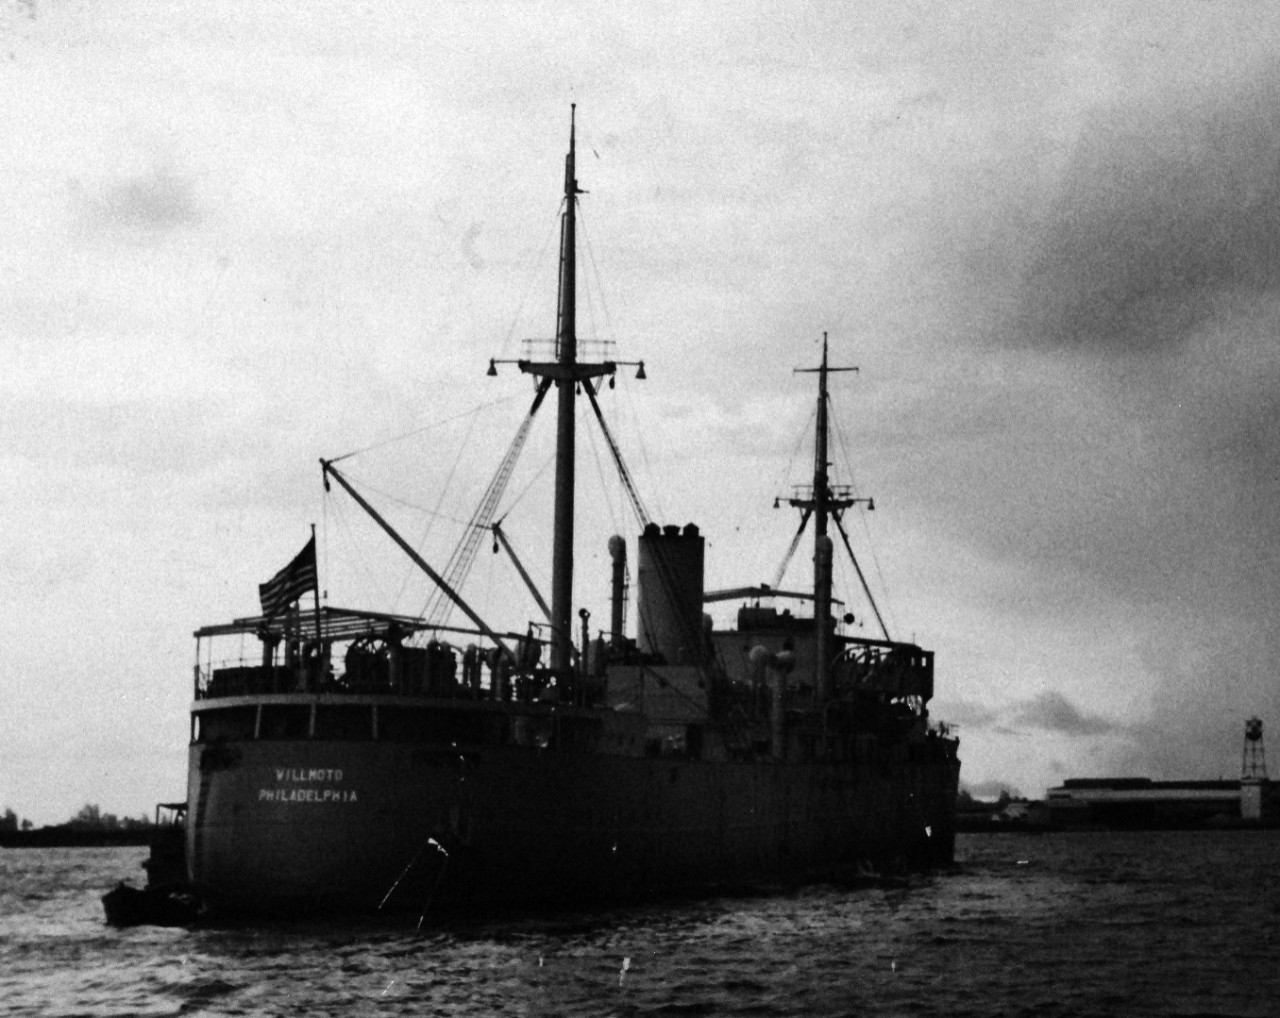 <p>80-CF-1058-1: MS Odenwald, Hamburg alias, Willmoto, captured on 6 November 1941. Image taken by U.S. Naval Air Station, San Juan, Puerto Rico, 18 November 1941.&nbsp;</p>
